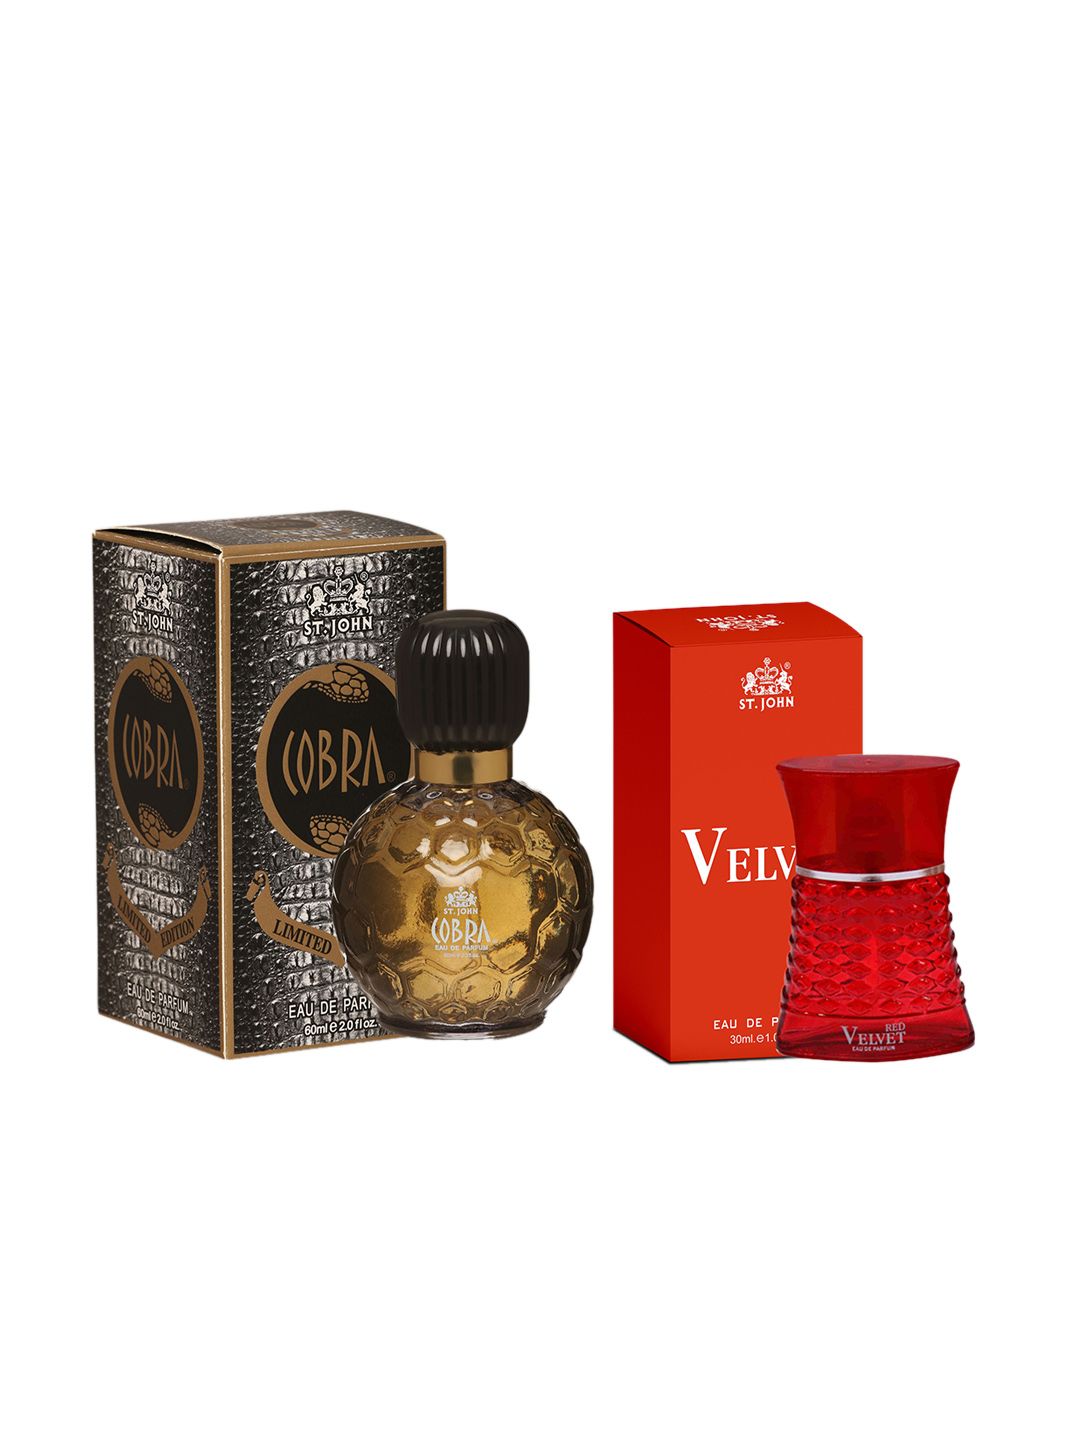 St. John Set of Cobra & Red Velvet Eau De Parfums Price in India